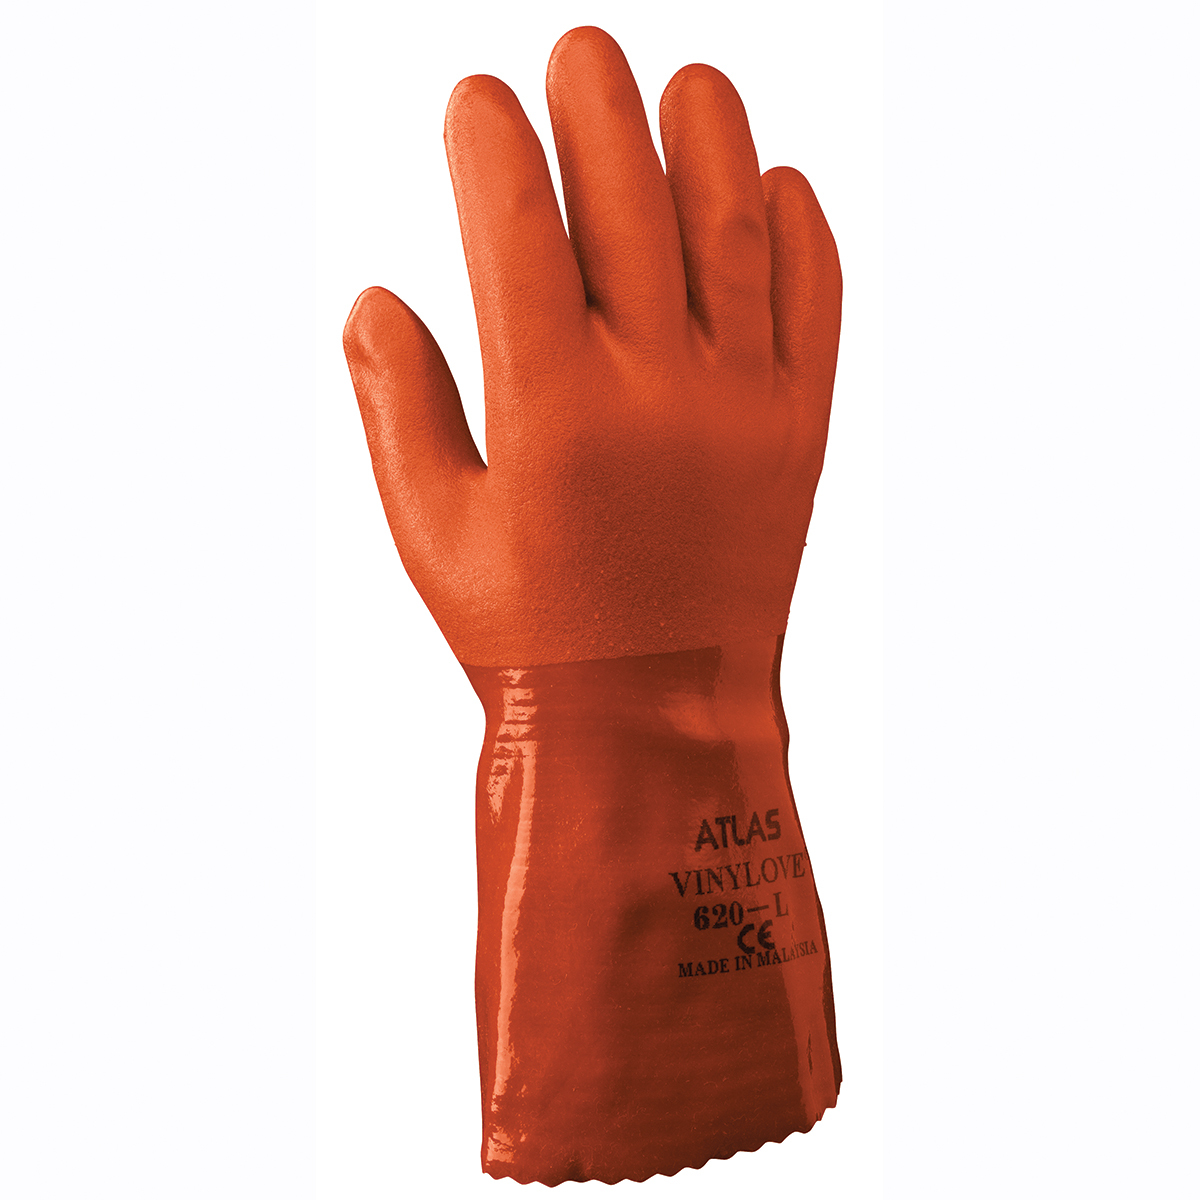 14 Length Medium Chemical Resistant SHOWA 3414  Neoprene Coated Glove Cotton Interlock Liner 14 Length Showa Best Glove Inc 3414-09 Pack of 12 Pairs